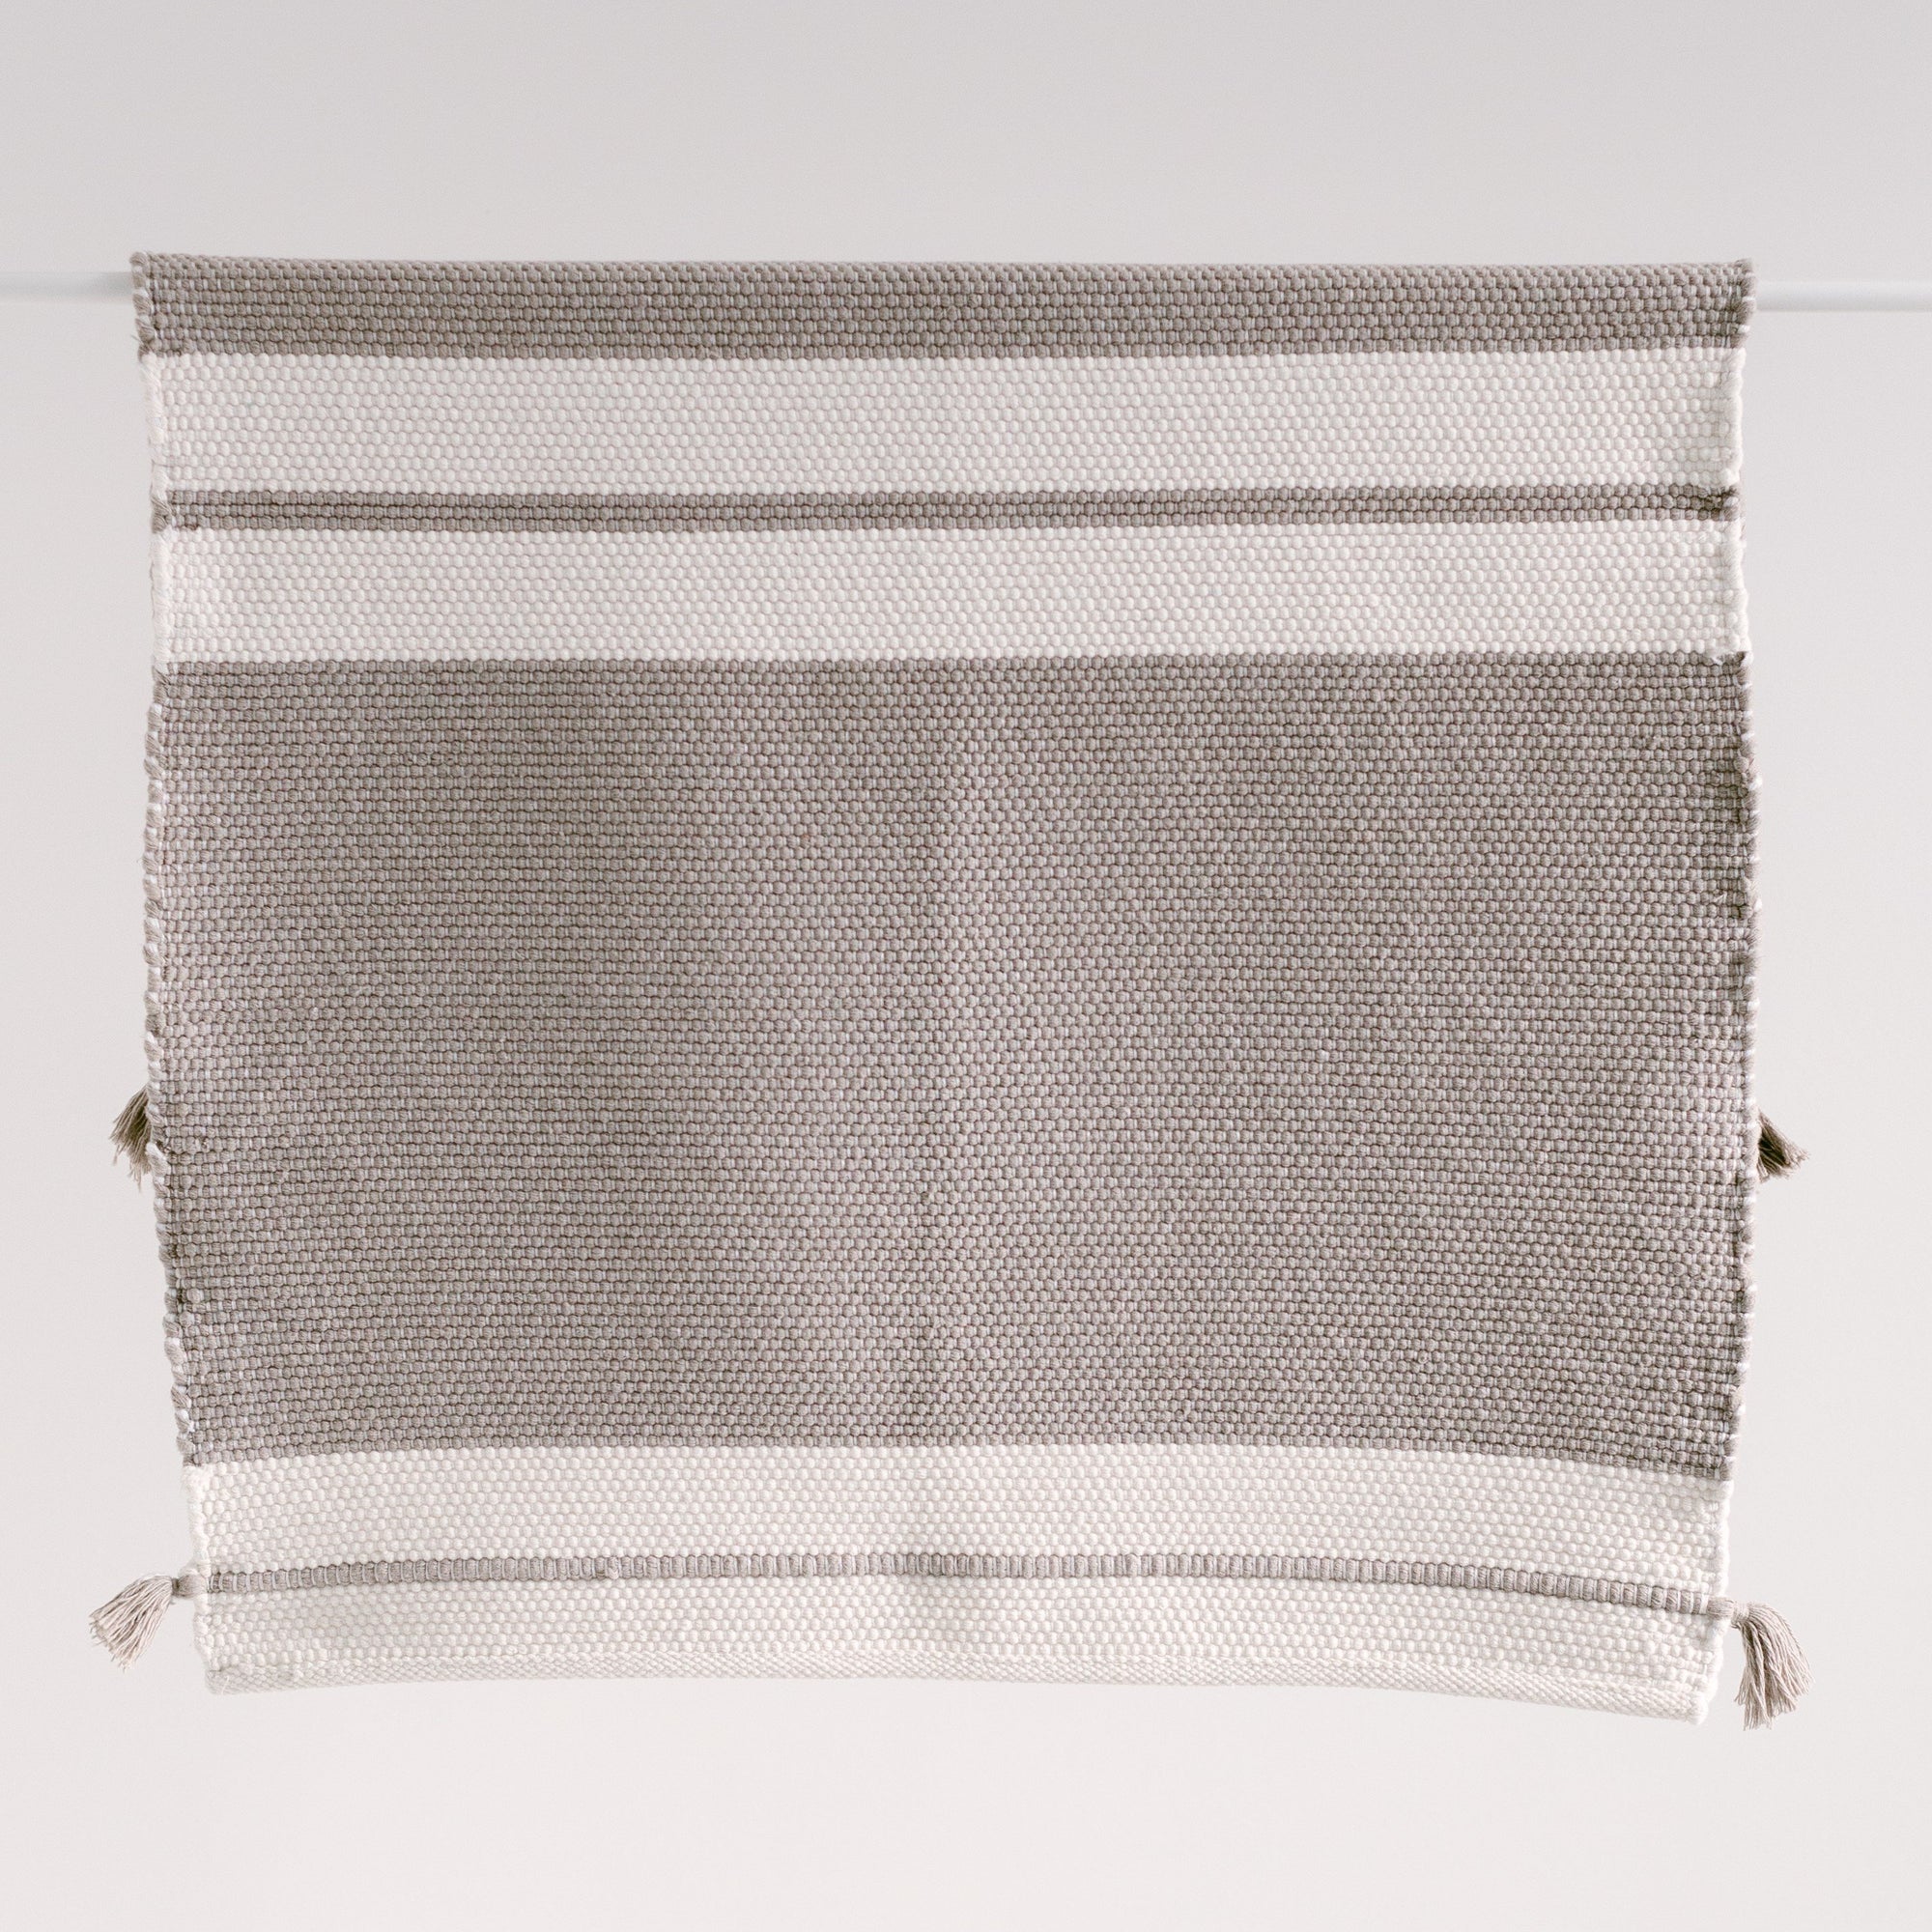 Handwoven 100% cotton bath rug grey cream stripe from artha collections